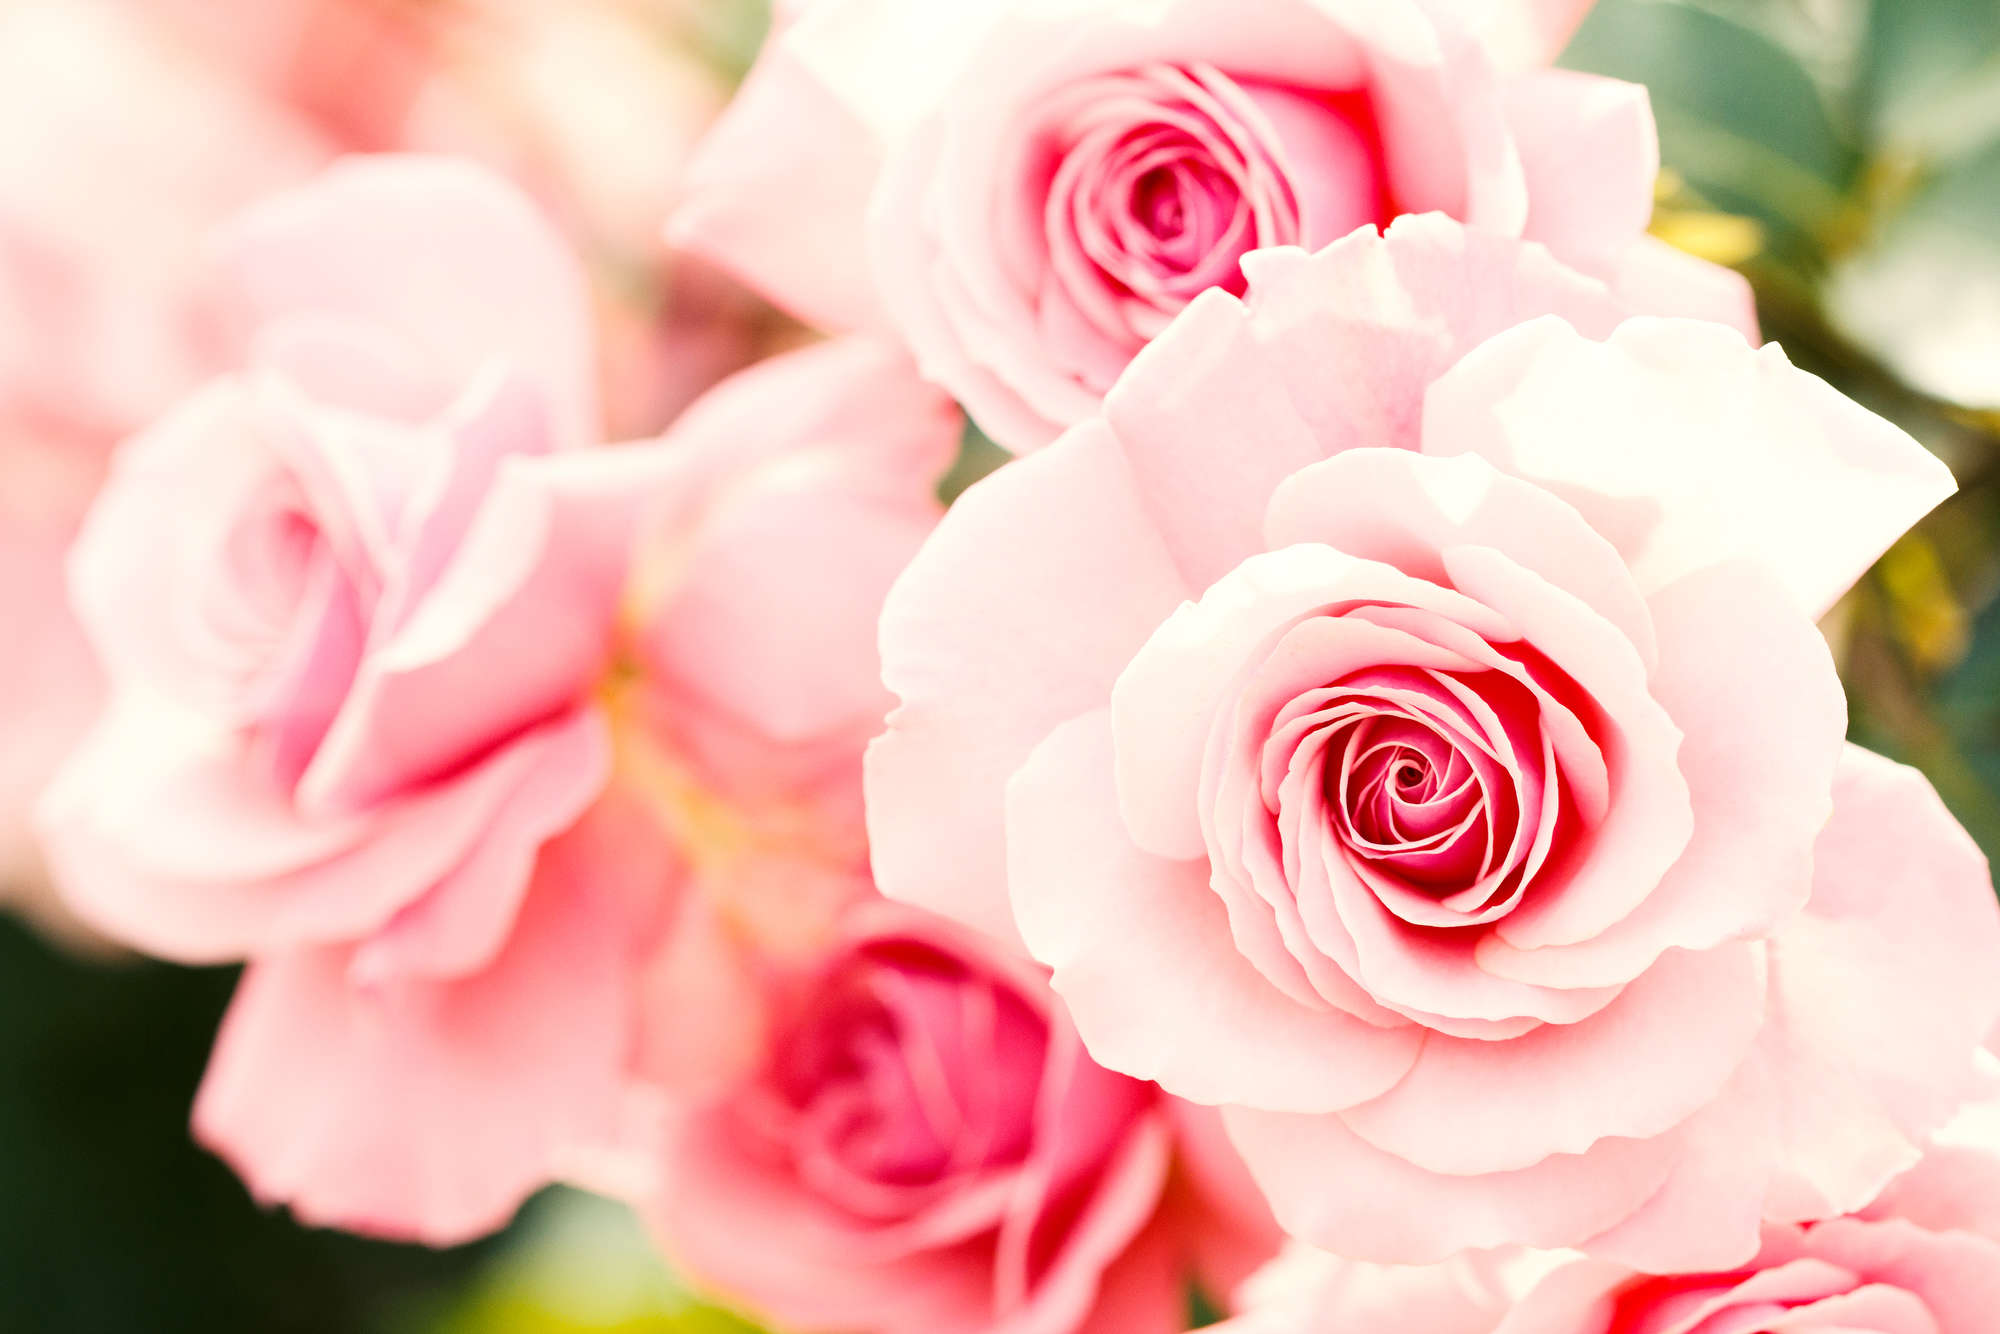             Plants mural pink roses on premium smooth fleece
        